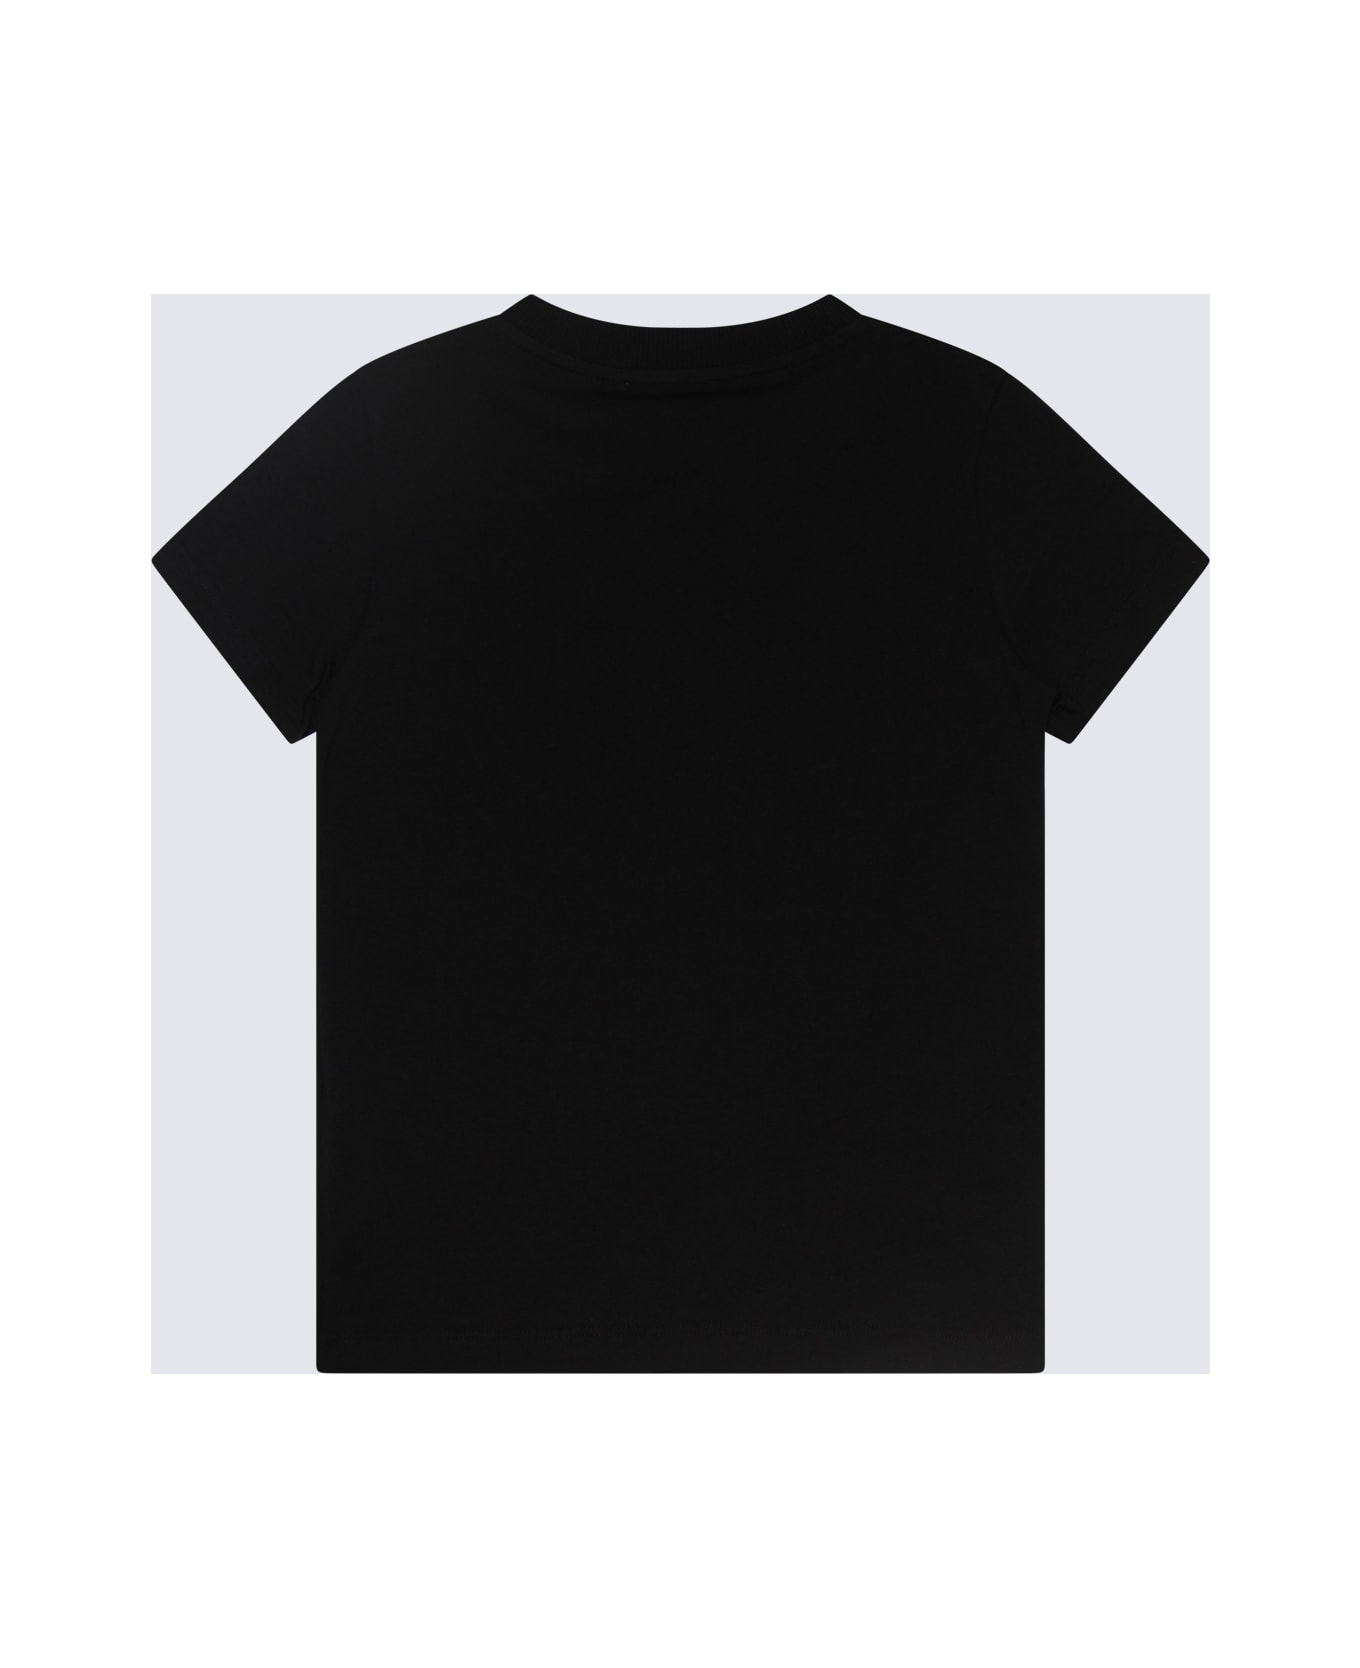 Moschino Black And White Cotton T-shirt - Black